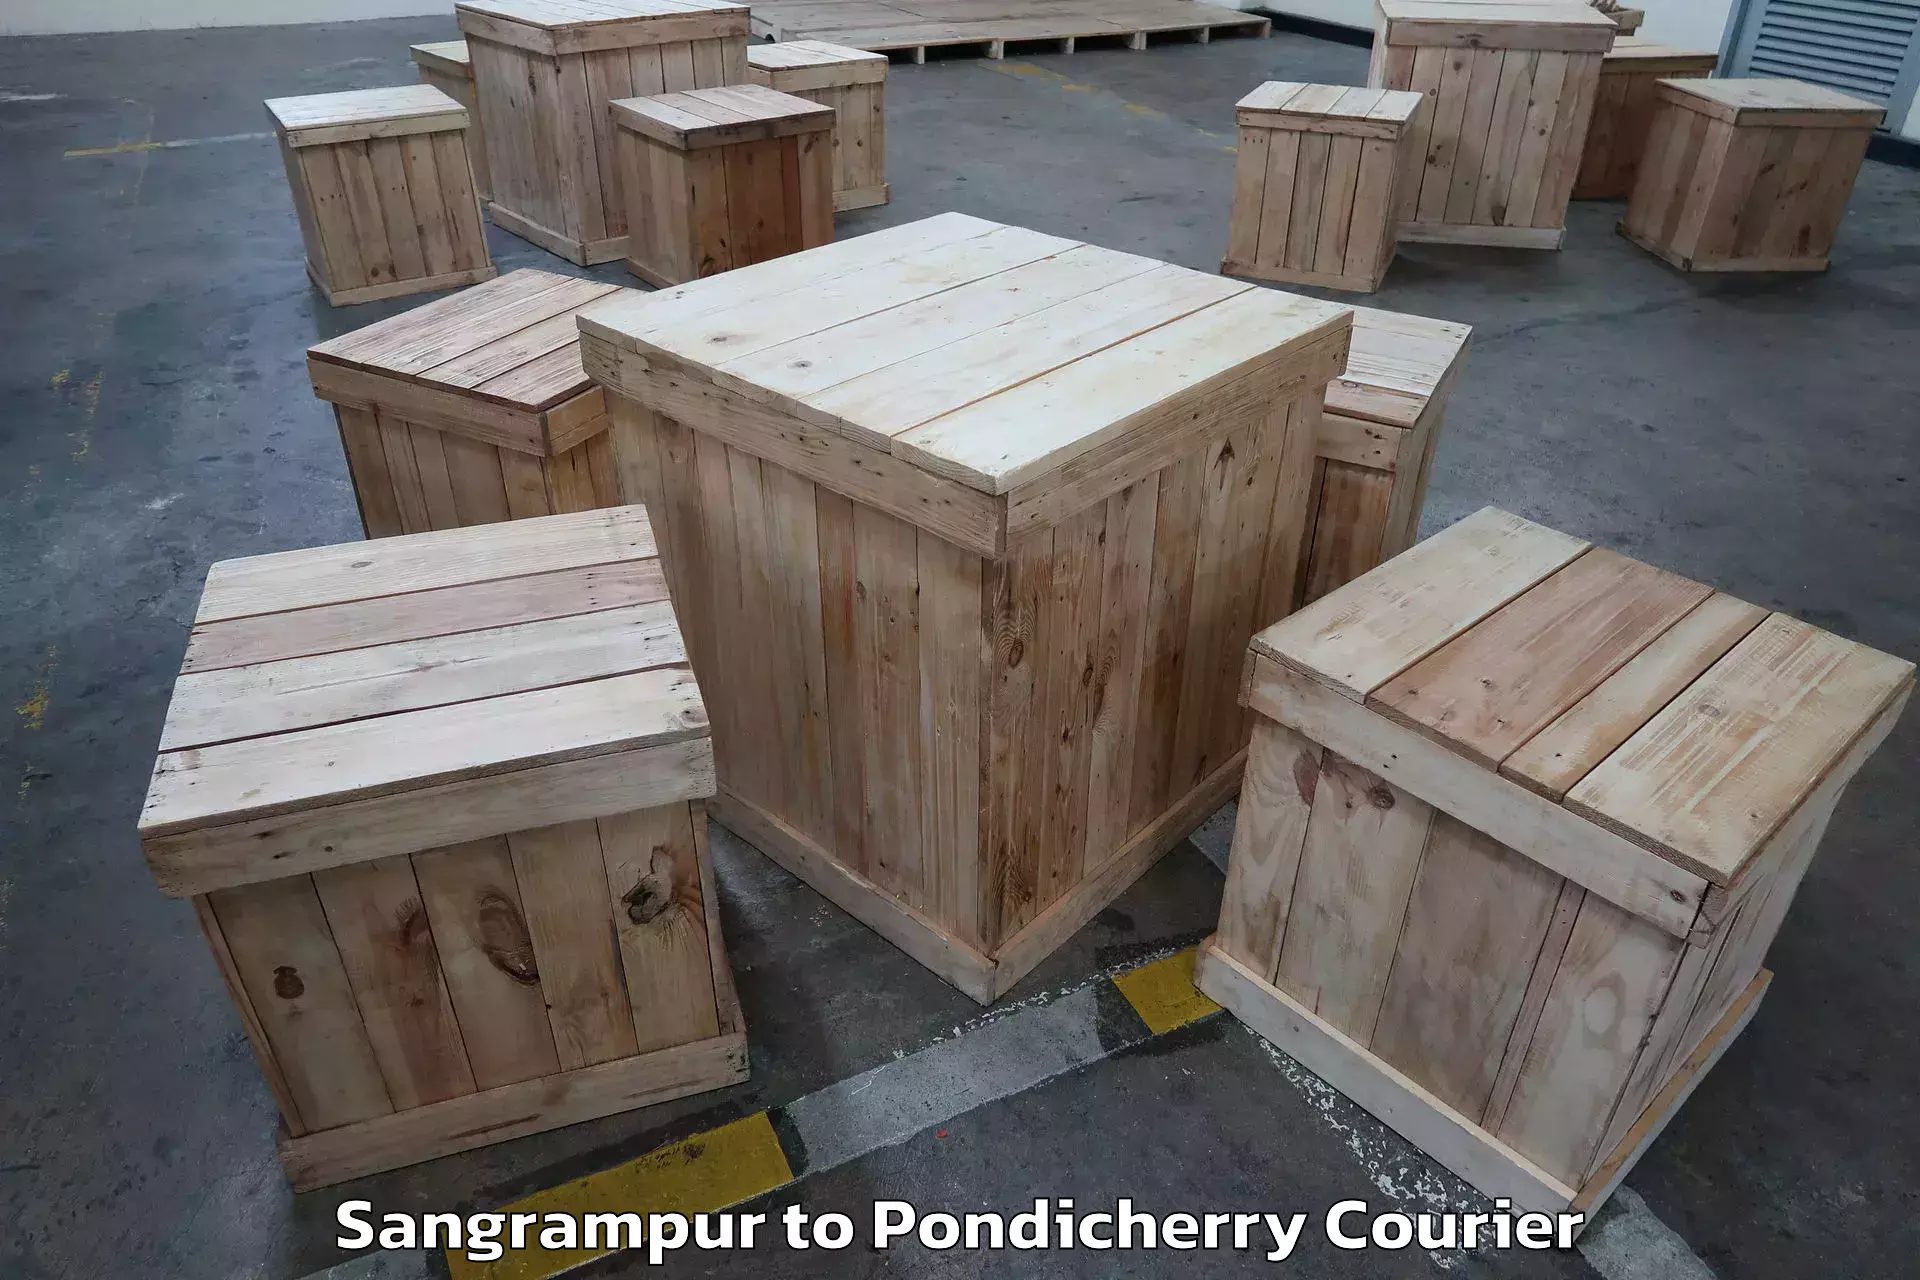 Furniture transport specialists Sangrampur to Pondicherry